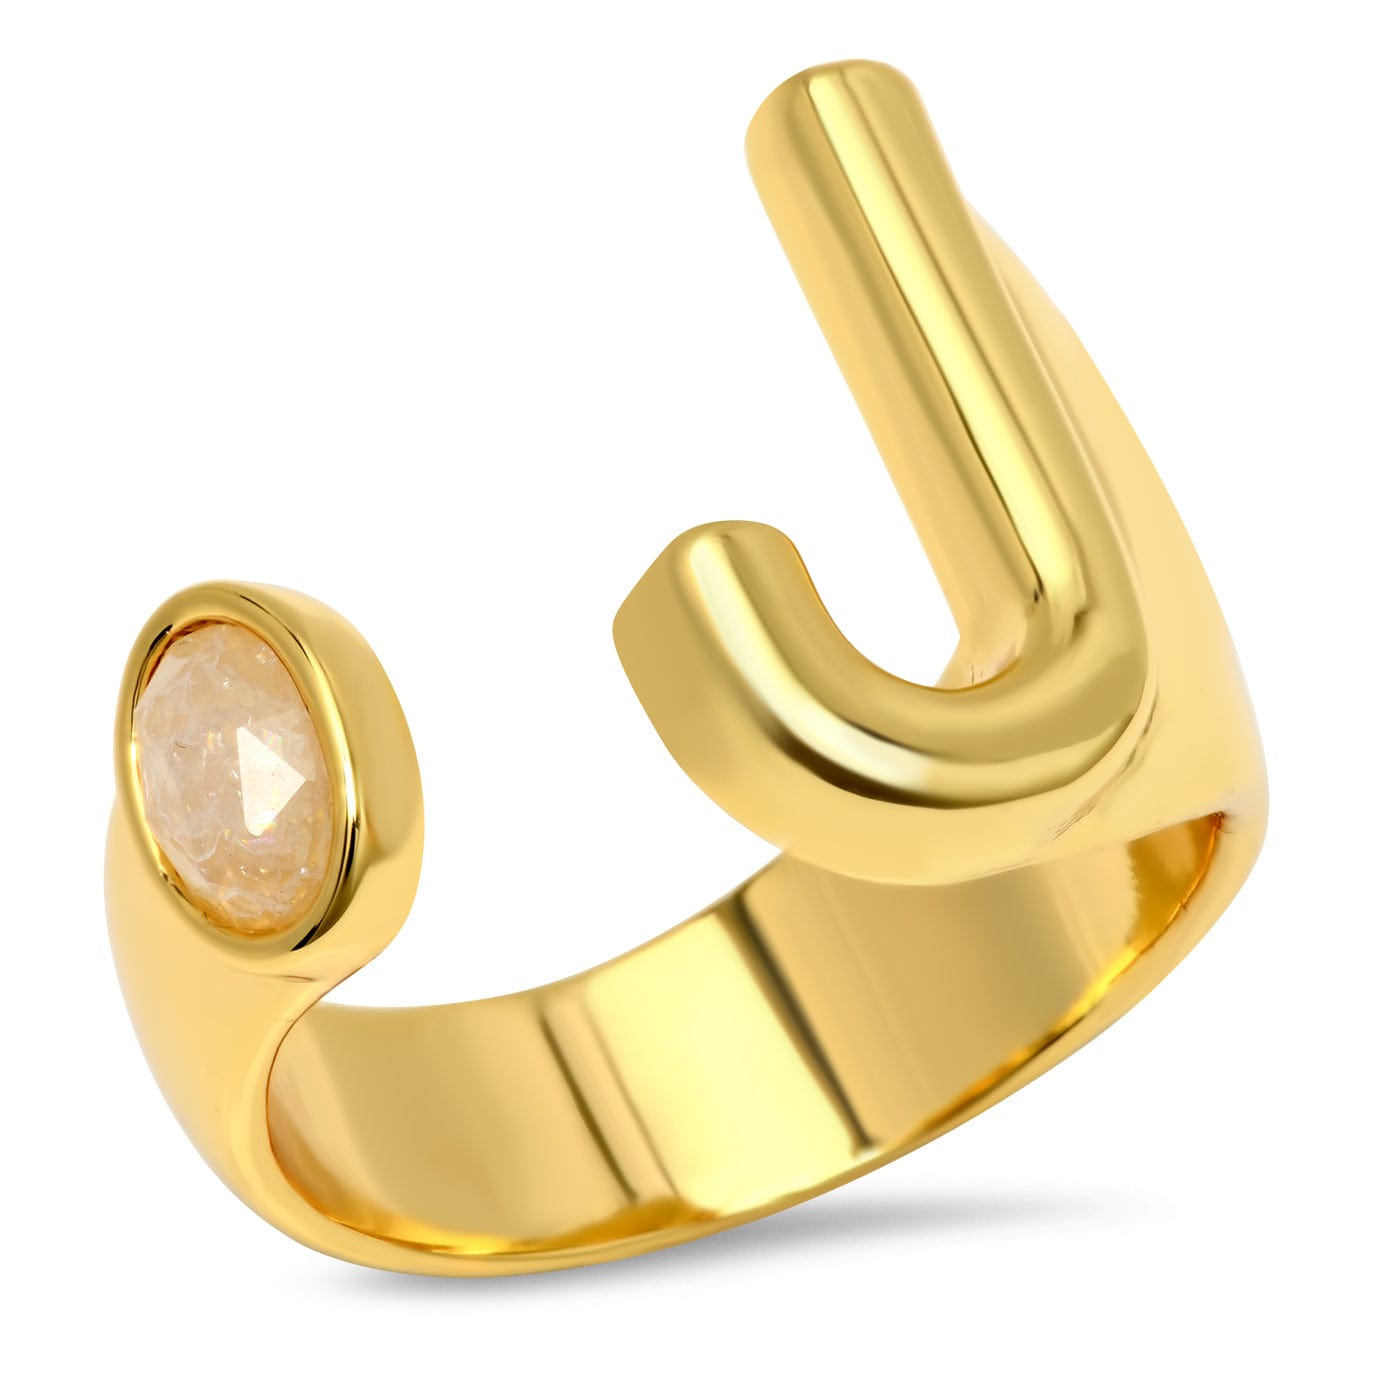 TAI JEWELRY Rings Initial Wrap Ring